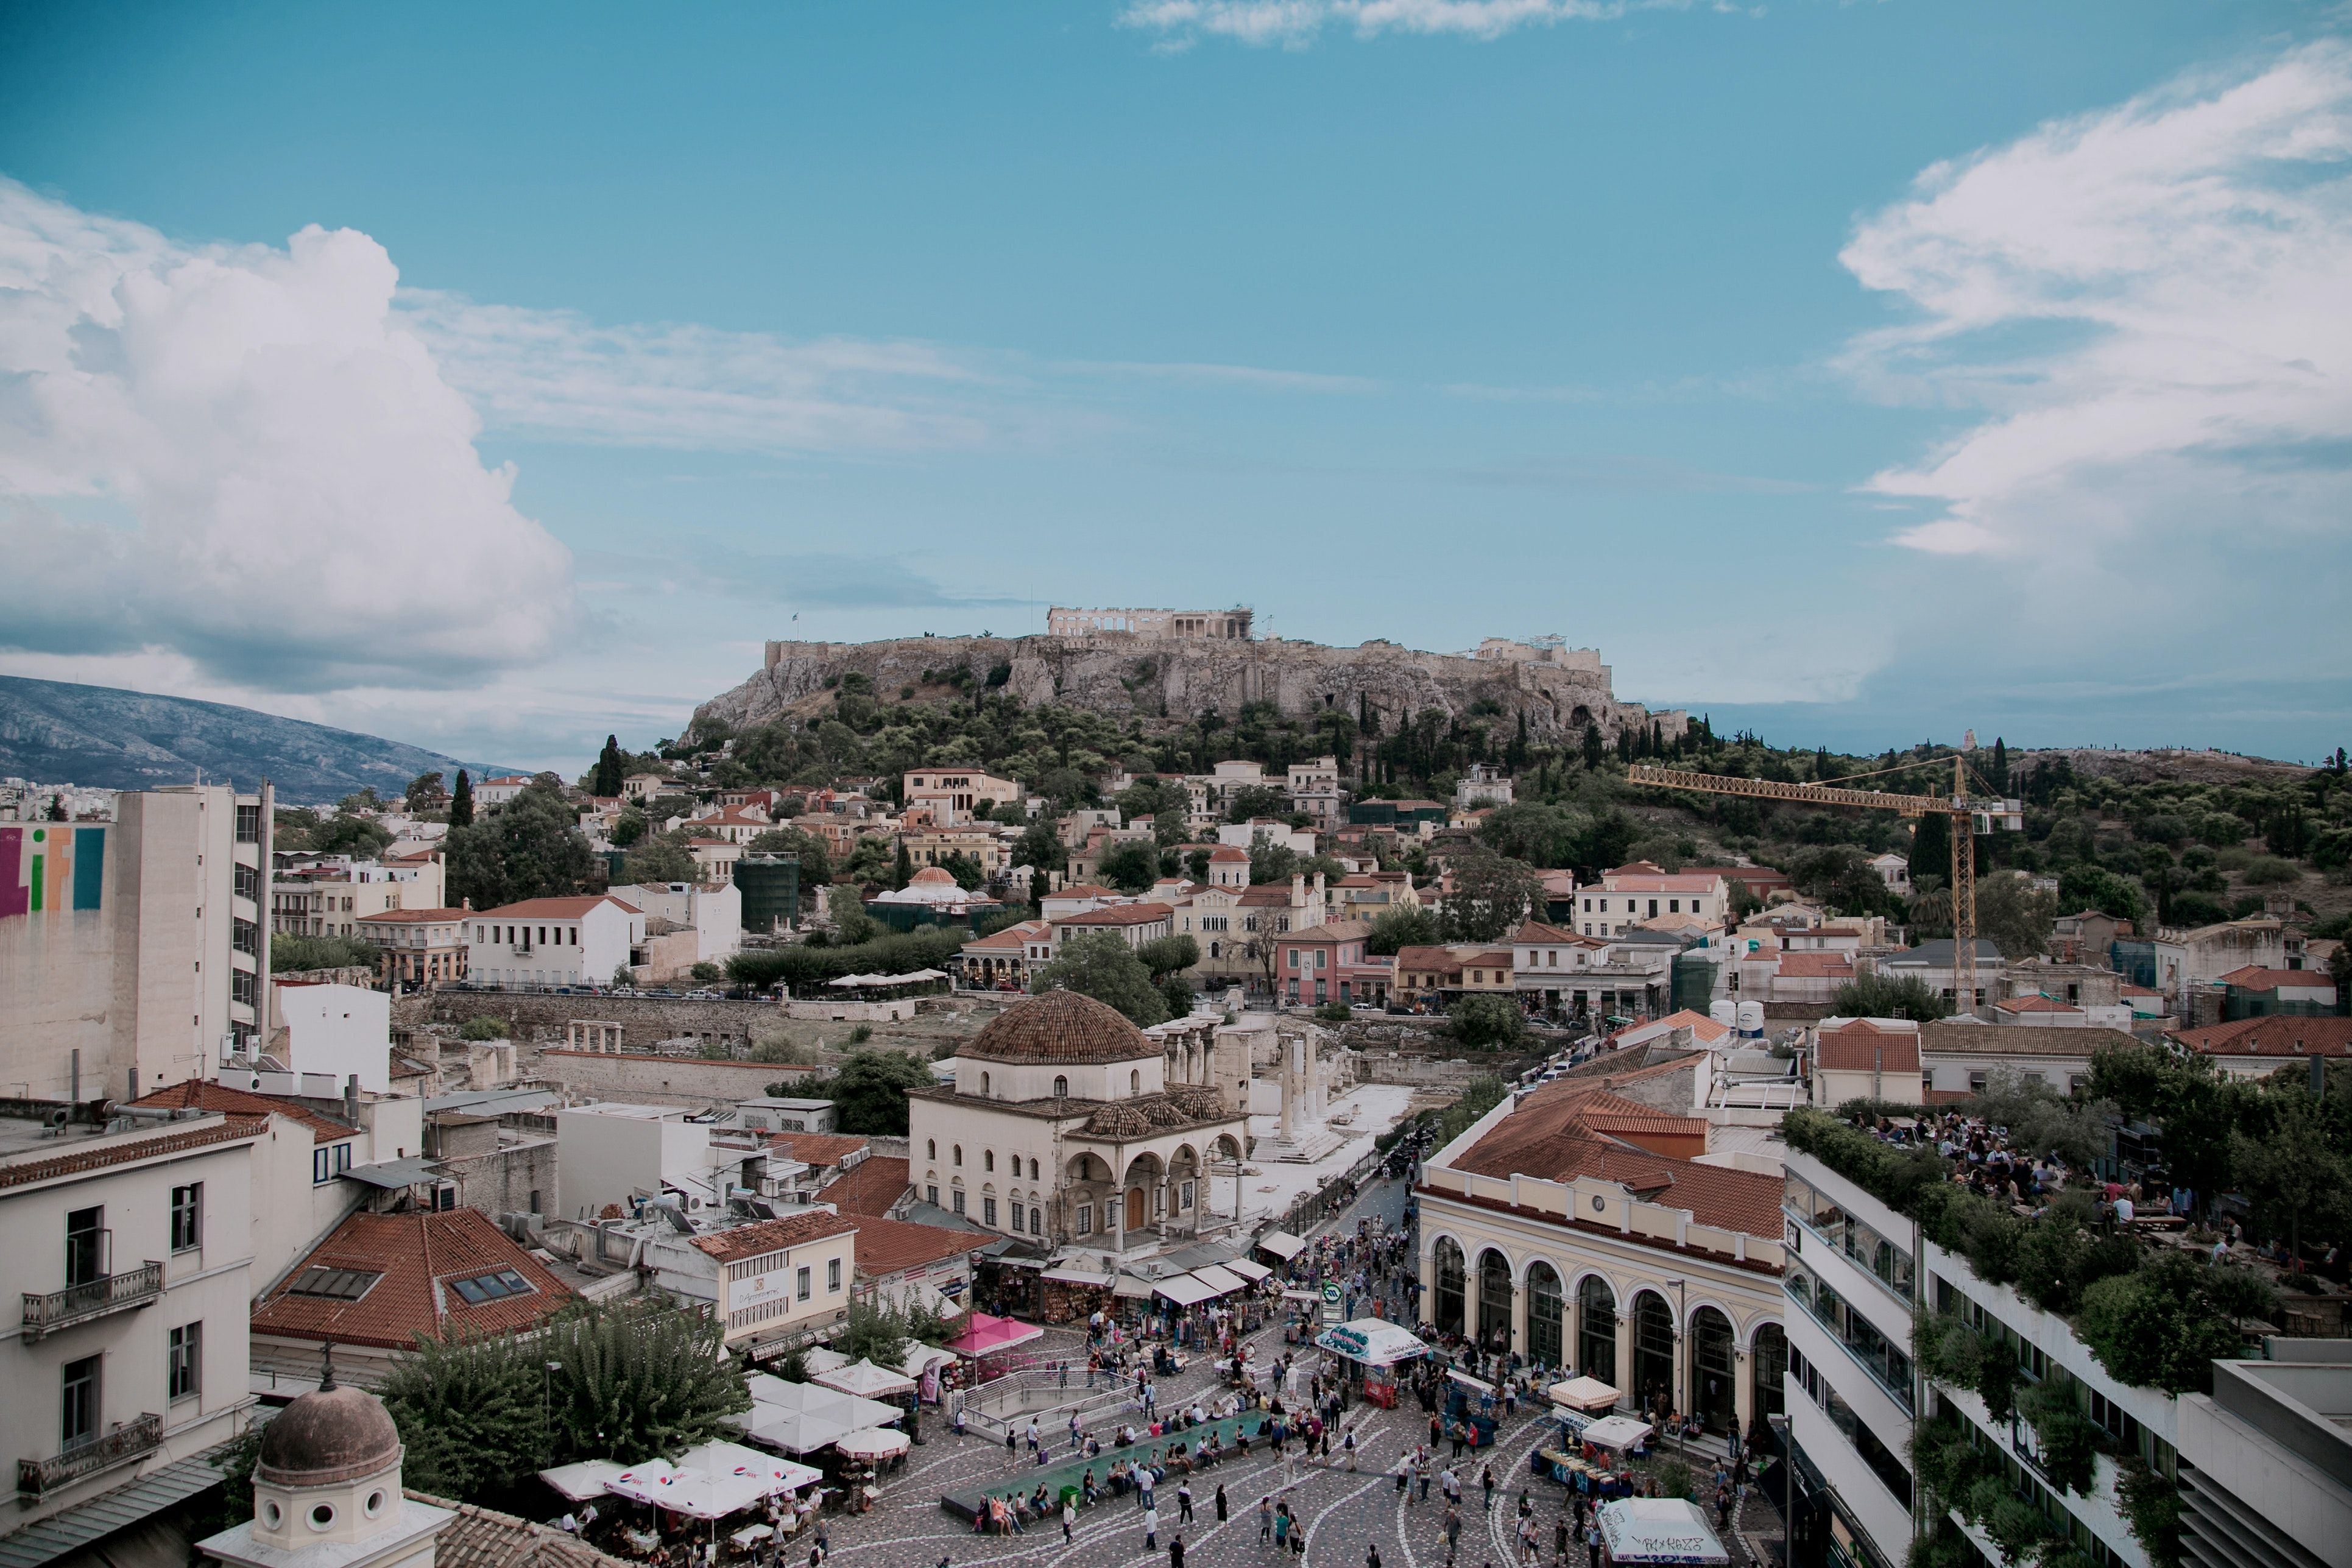 Yunani ibu adalah kota 13 Dewa